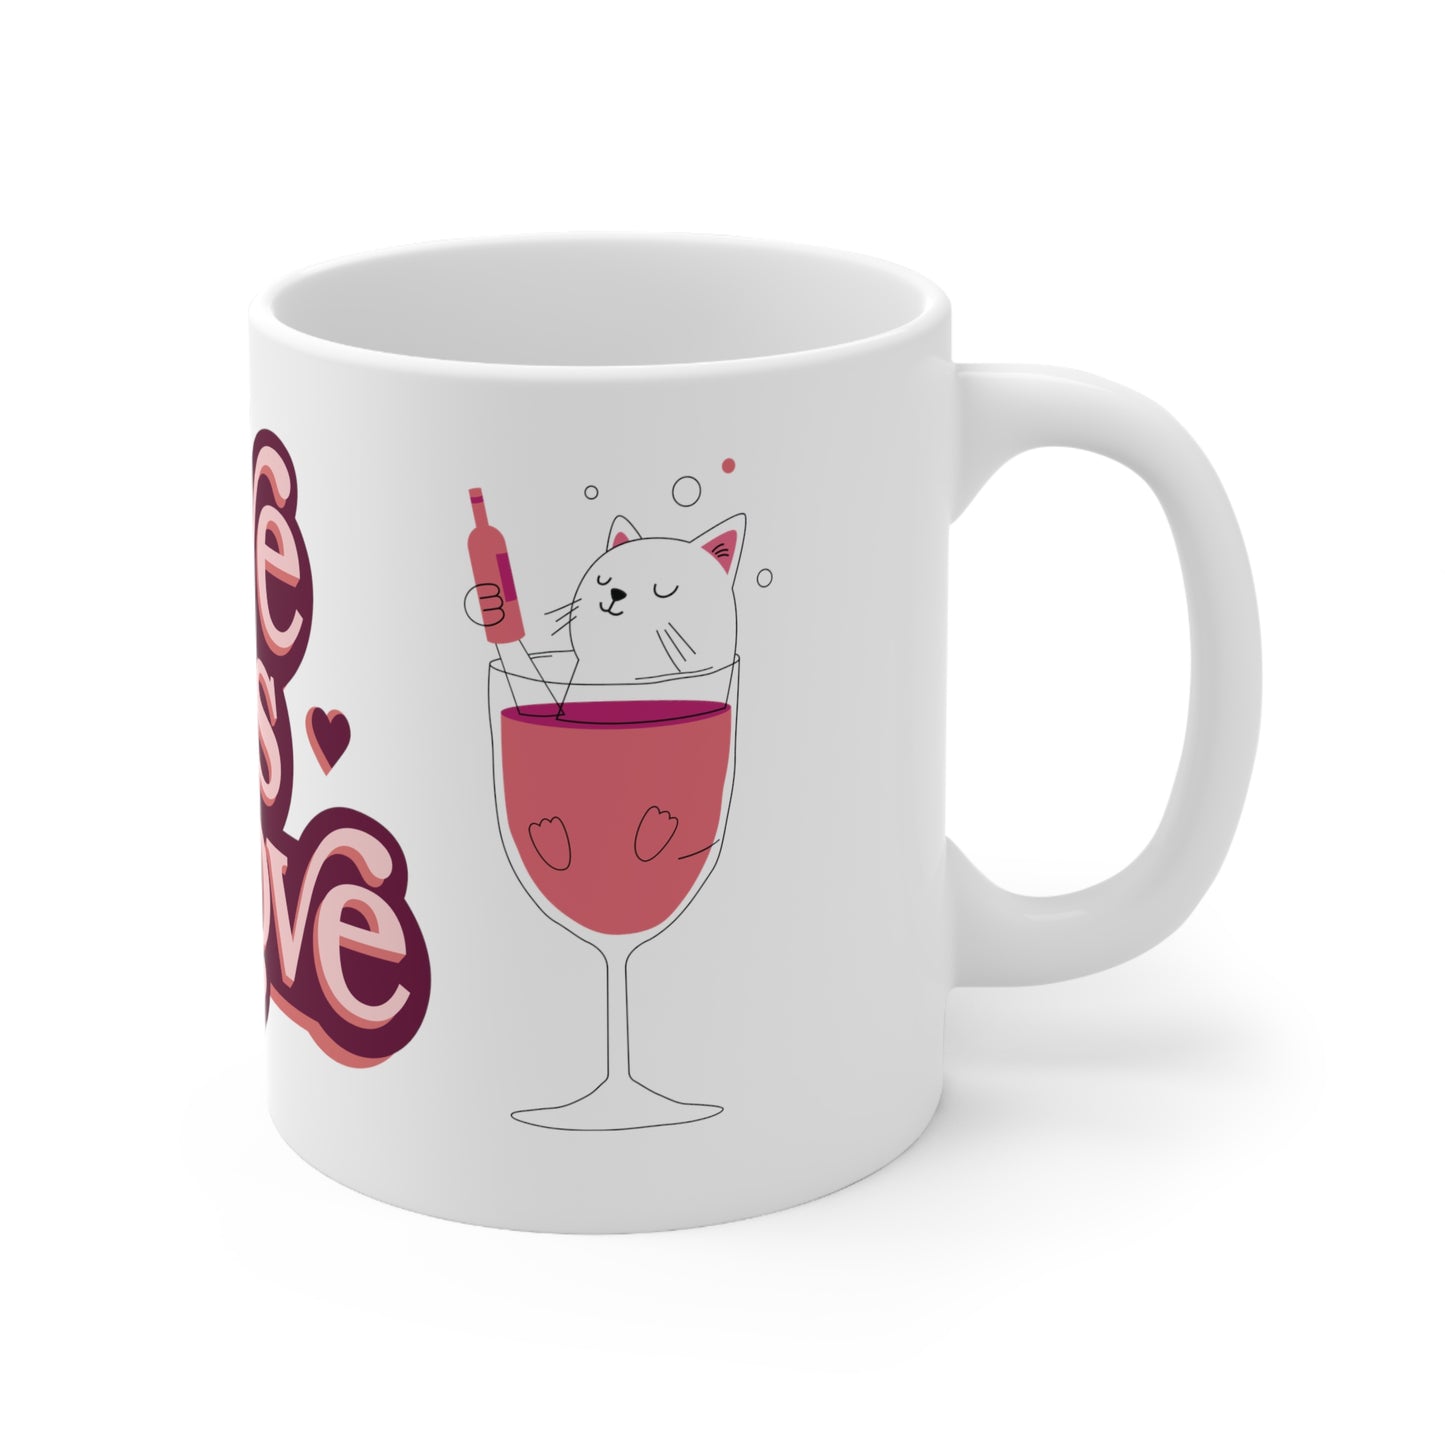 Love Is Love Ceramic Coffee Mug 11oz - Sip and Celebrate! Mug 11oz